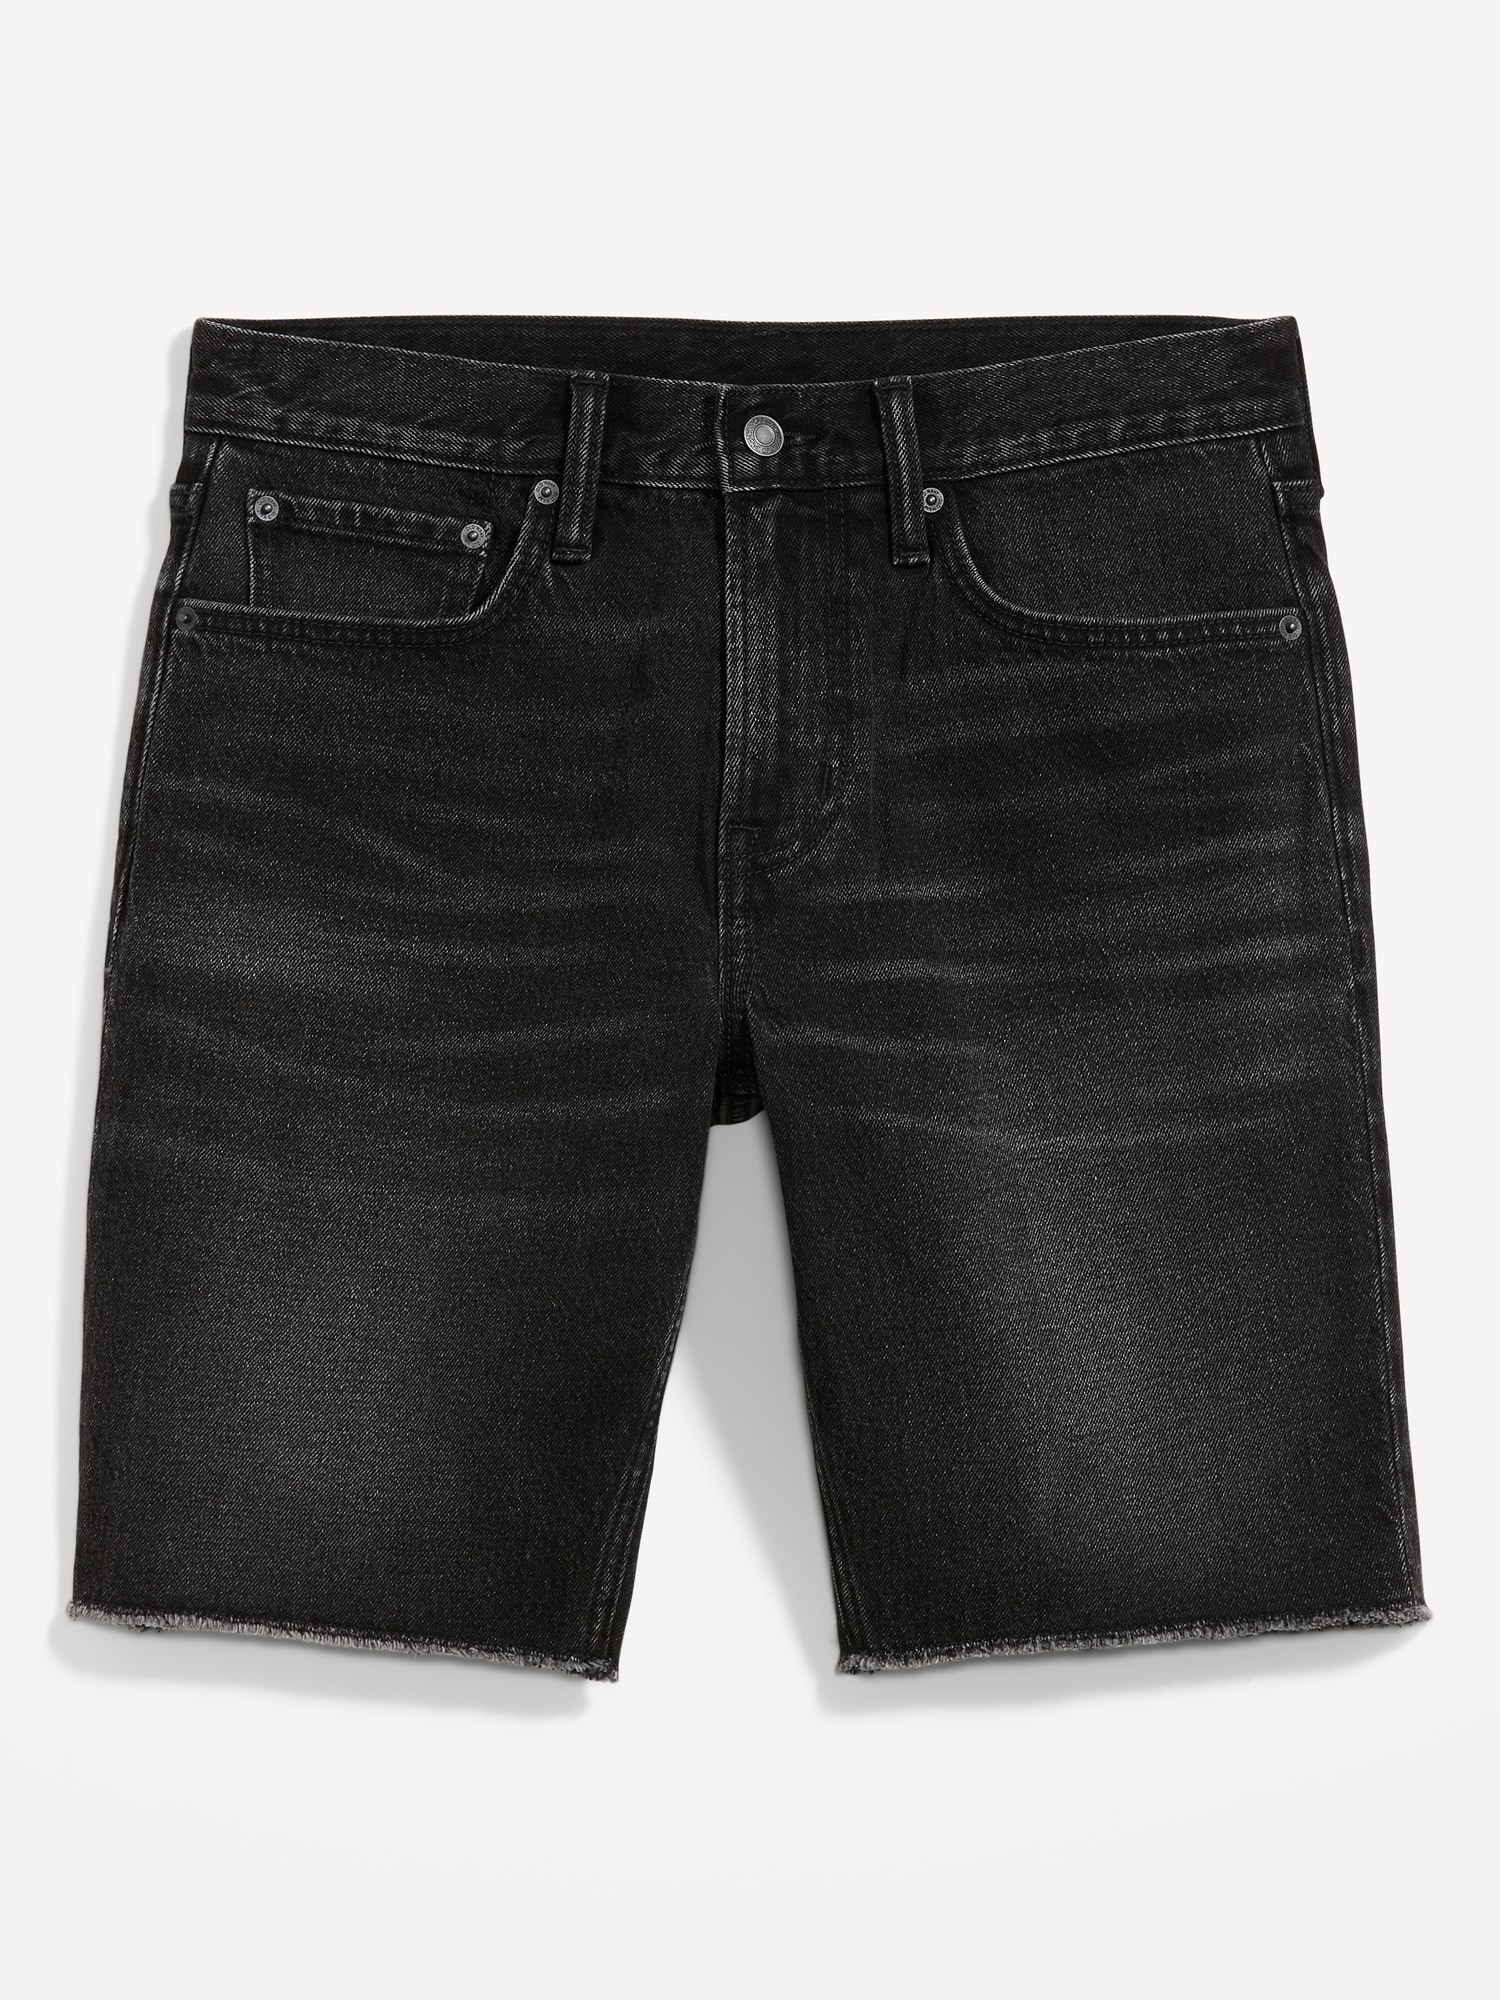 Slim Built-In Flex Black Cut-Off Jean Shorts for Men -- 9.5-inch inseam ...